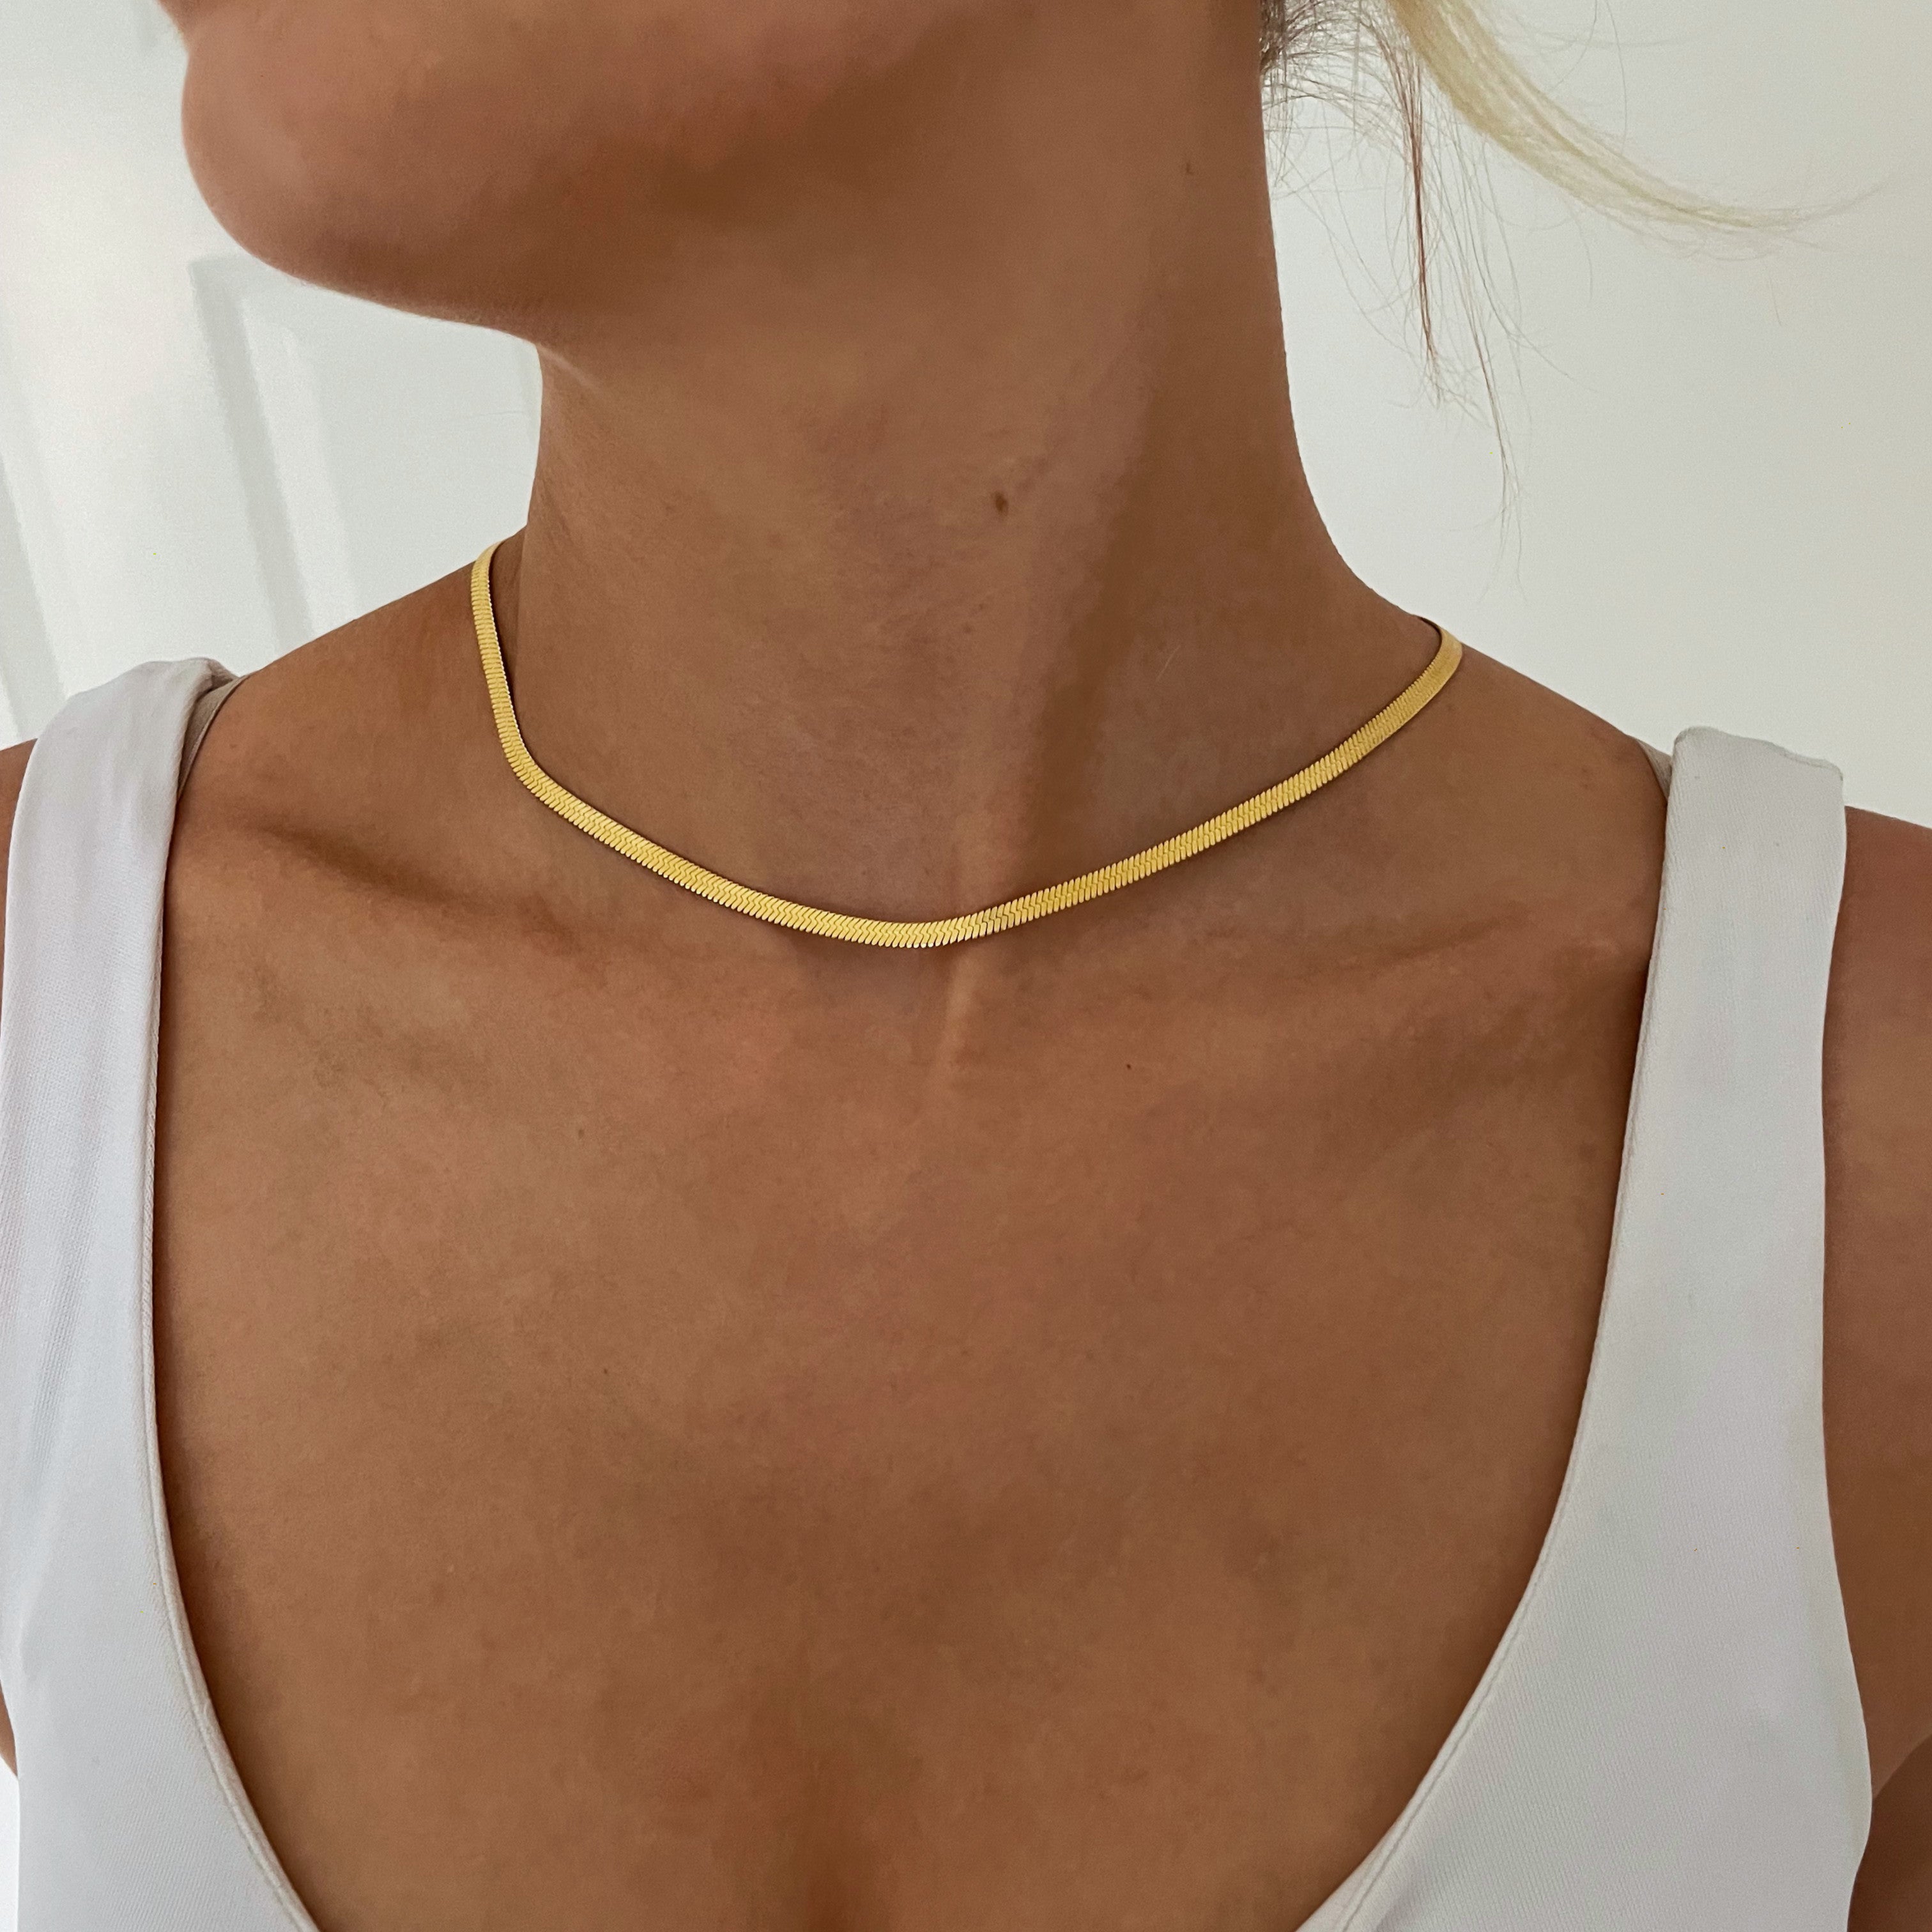 Sleek gold herringbone link necklace